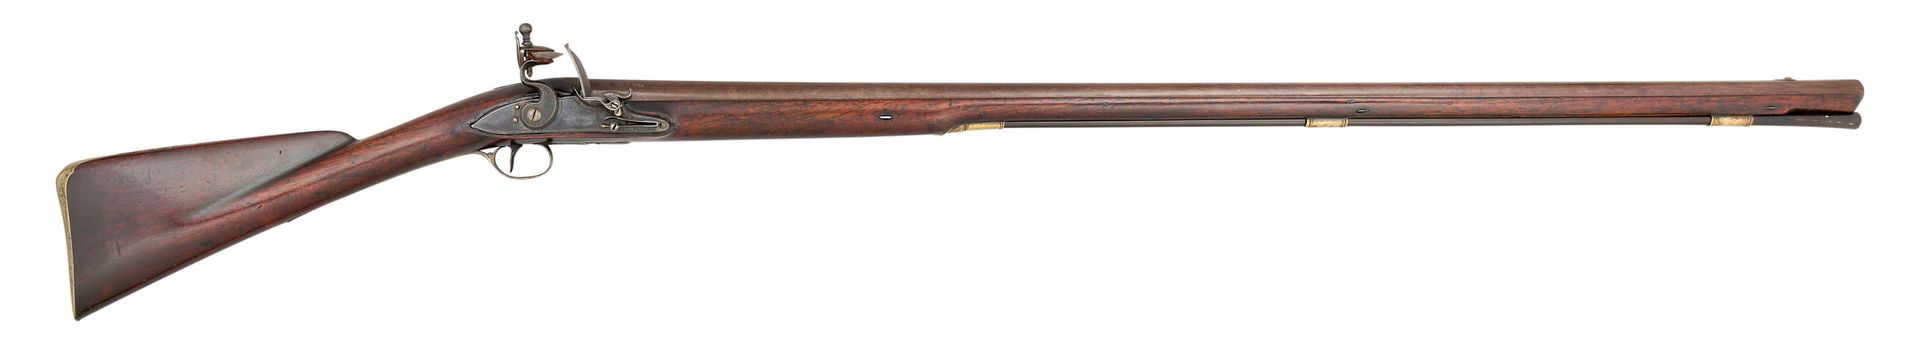 A 12 BORE FLINTLOCK SPORTING GUN BY GRIFFIN & TOW, CIRCA 1775 A 12 BORE FLINTLOC&hellip;